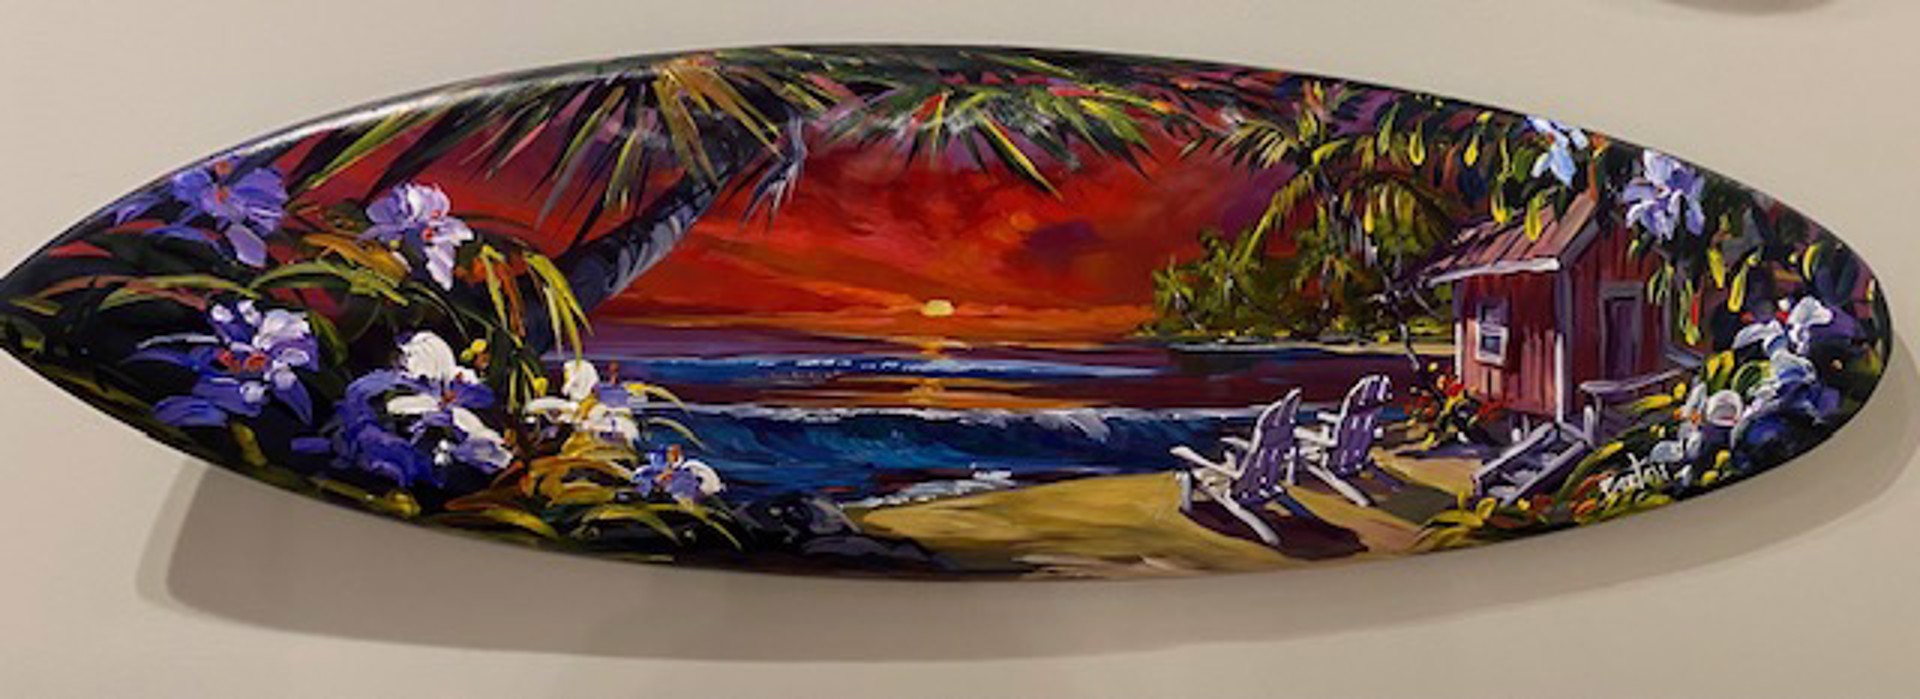 Sunset Shores Surfboard by Steve Barton